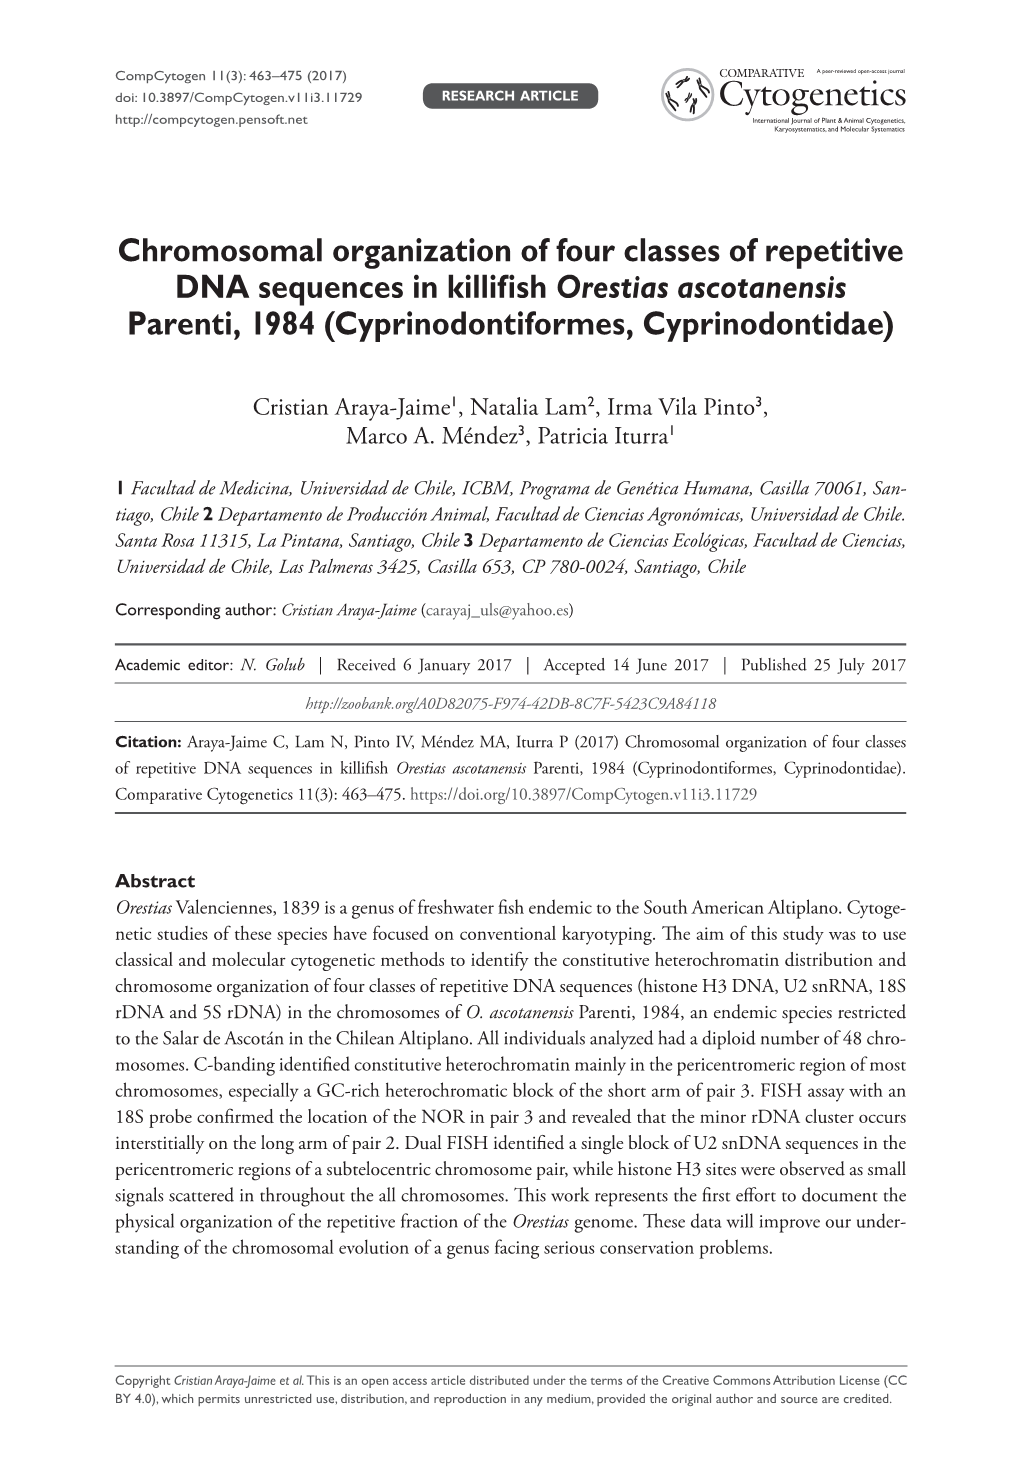 Chromosomal Organization of Four Classes of Repetitive DNA Sequences in Killifish Orestias Ascotanensis Parenti, 1984 (Cyprinodontiformes, Cyprinodontidae)